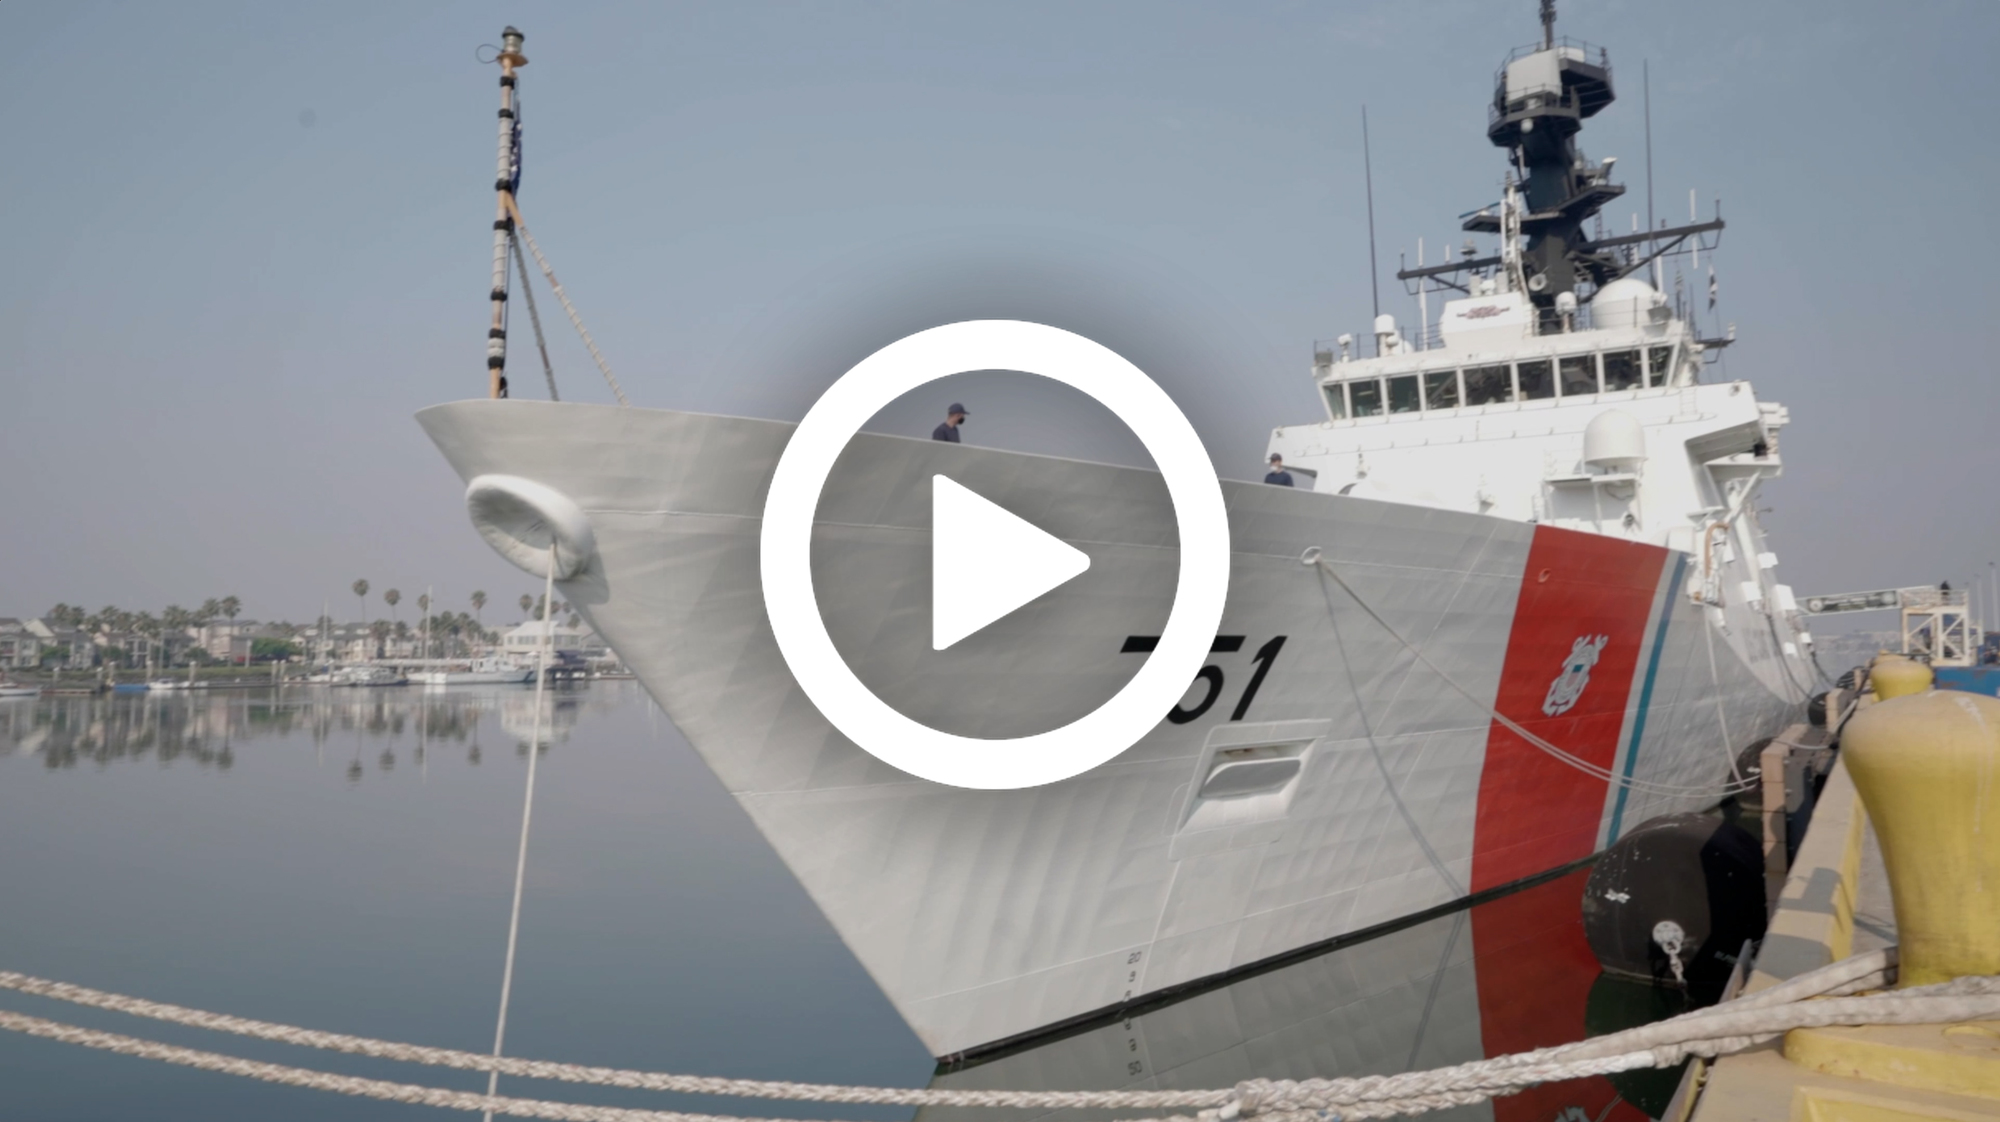 VIDEO: Alameda, California-based Coast Guard cutter departs for Western Pacific patrol